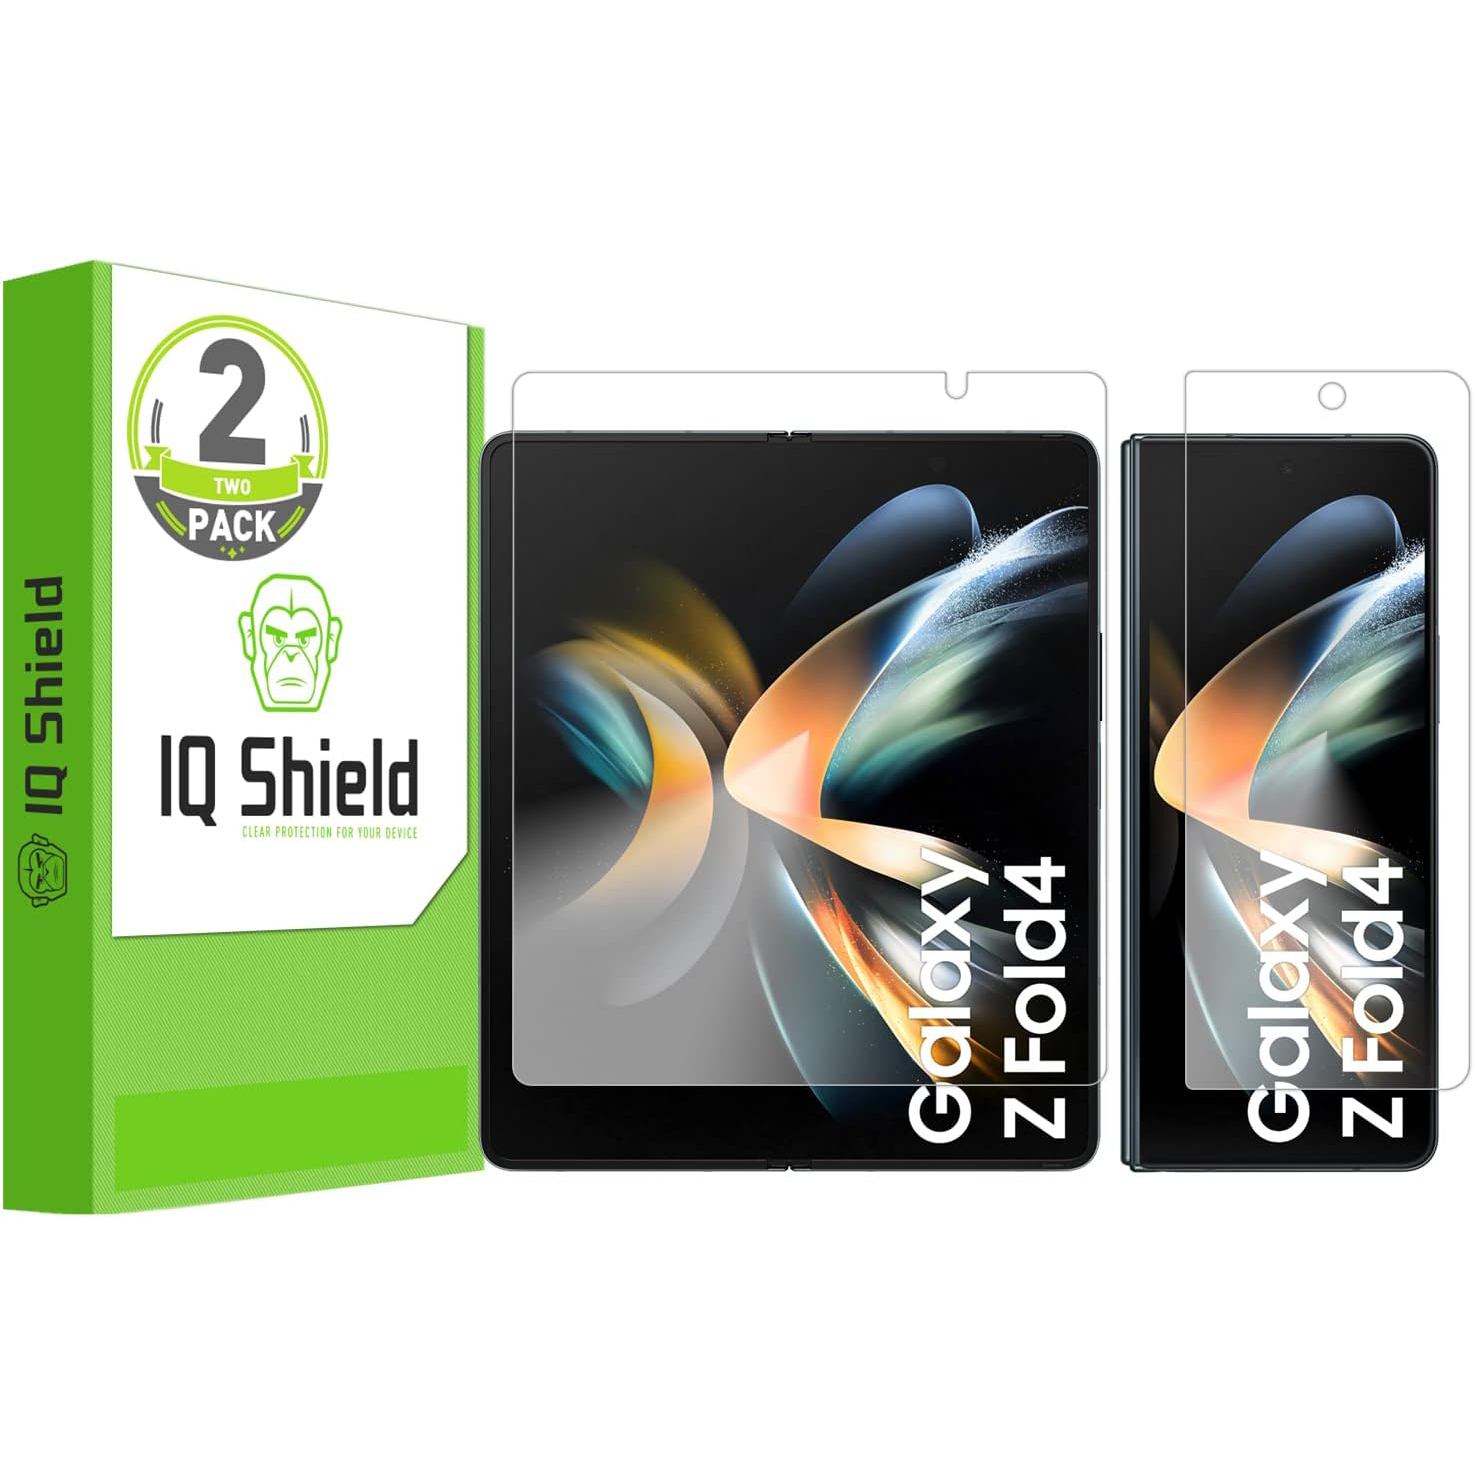 IQ Shield Z Fold 4, front views beside packaging